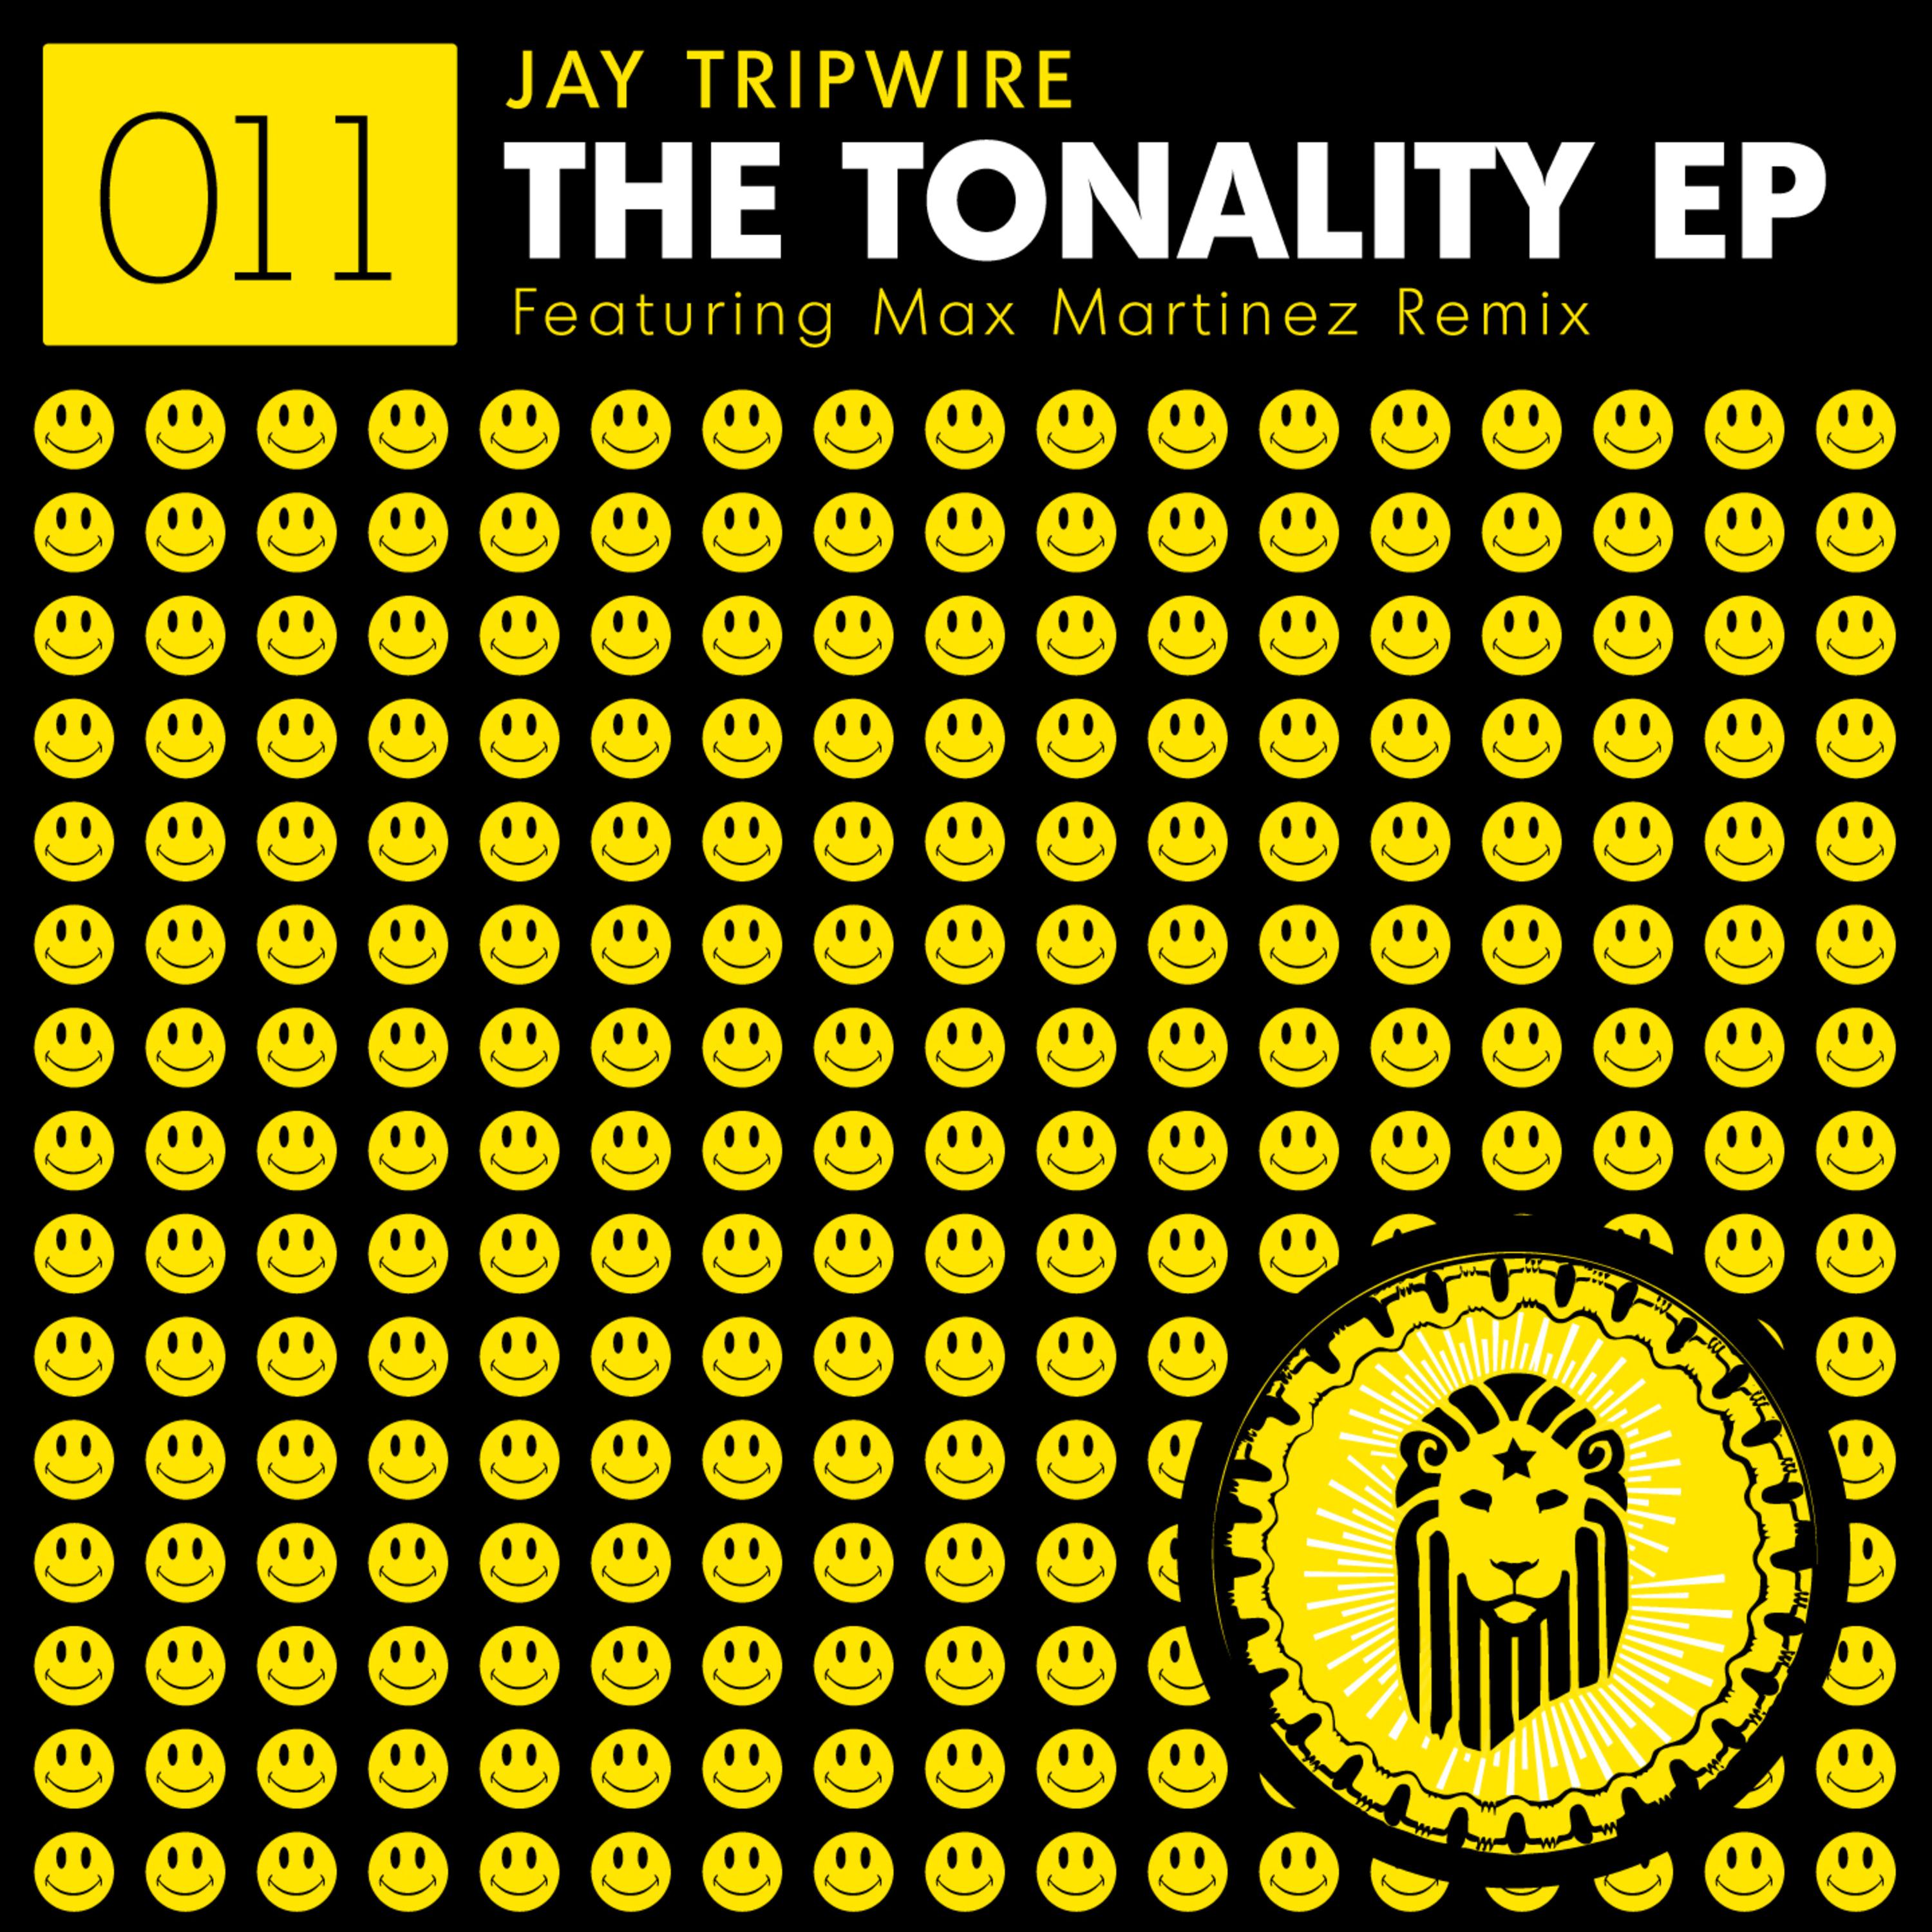 The Tonality EP